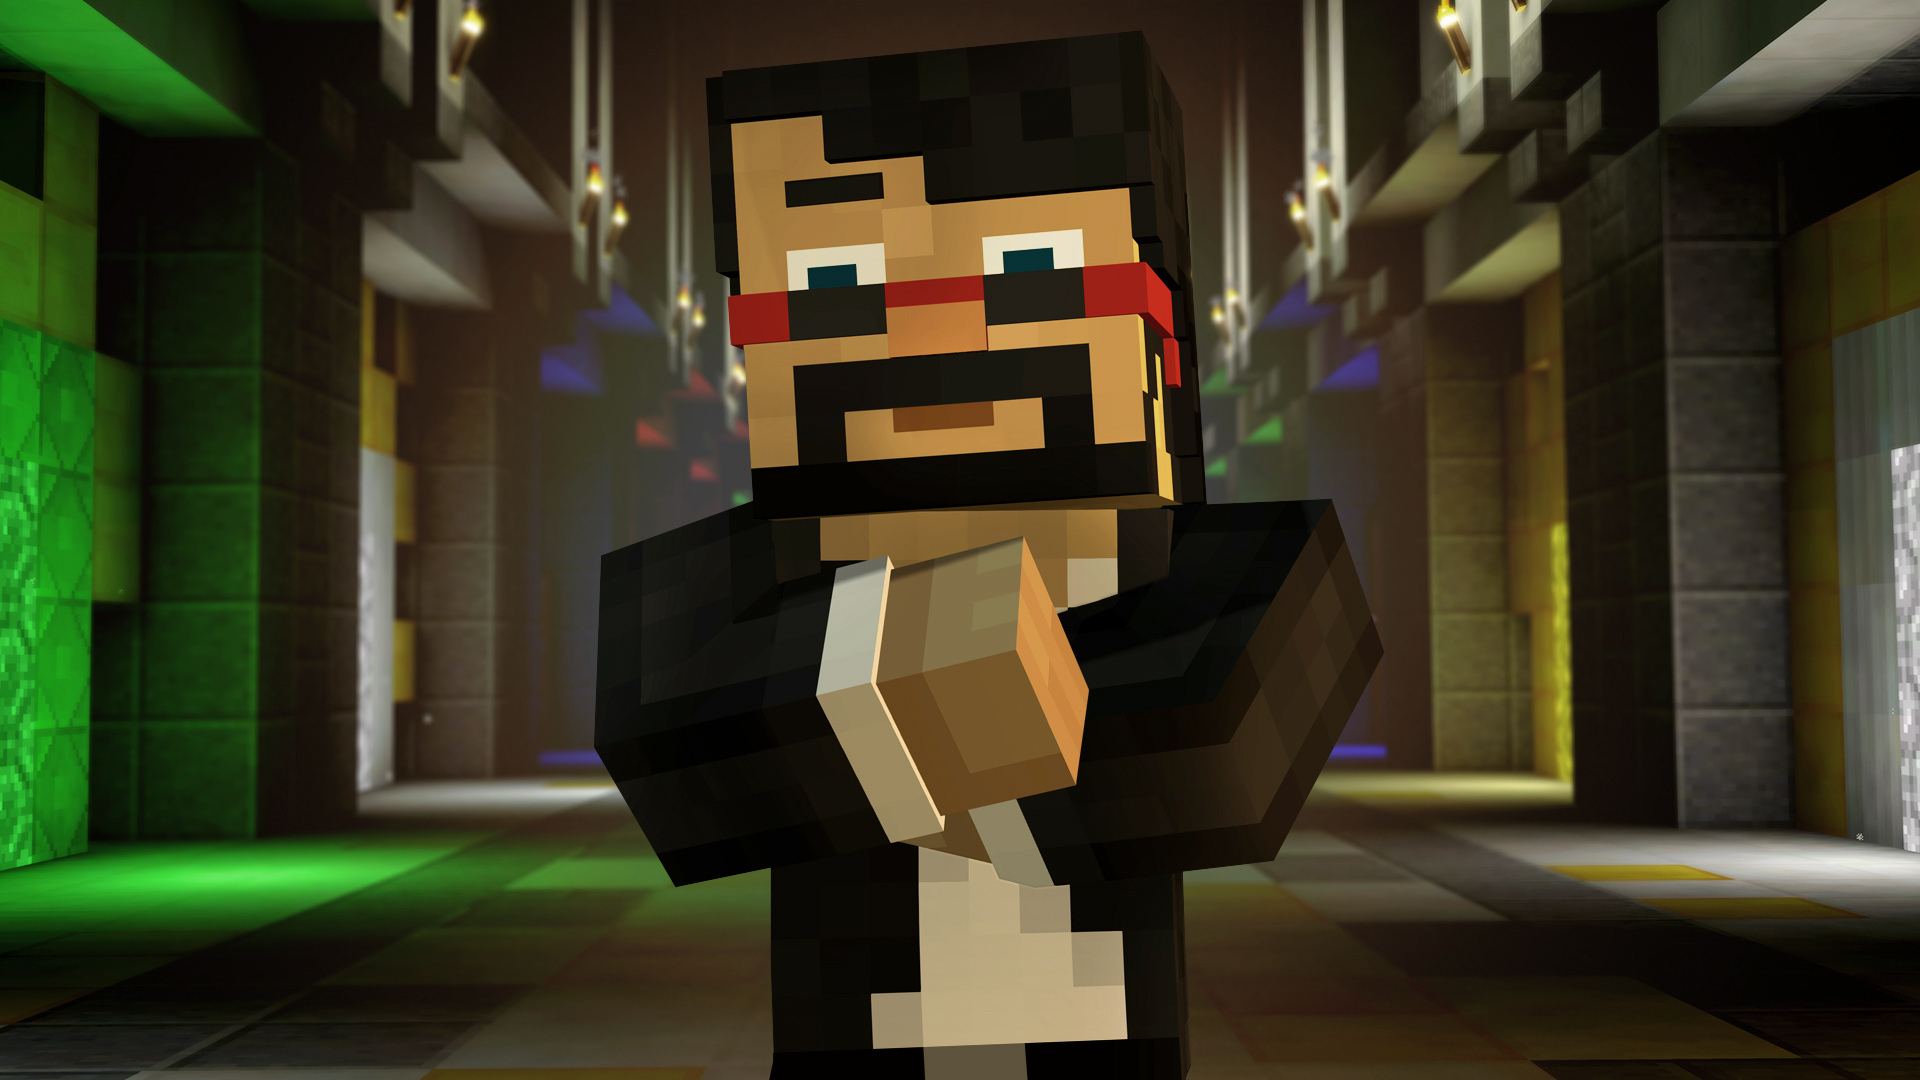 Minecraft: Story Mode - Adventure Pass [Steam download] [Online Game Code]